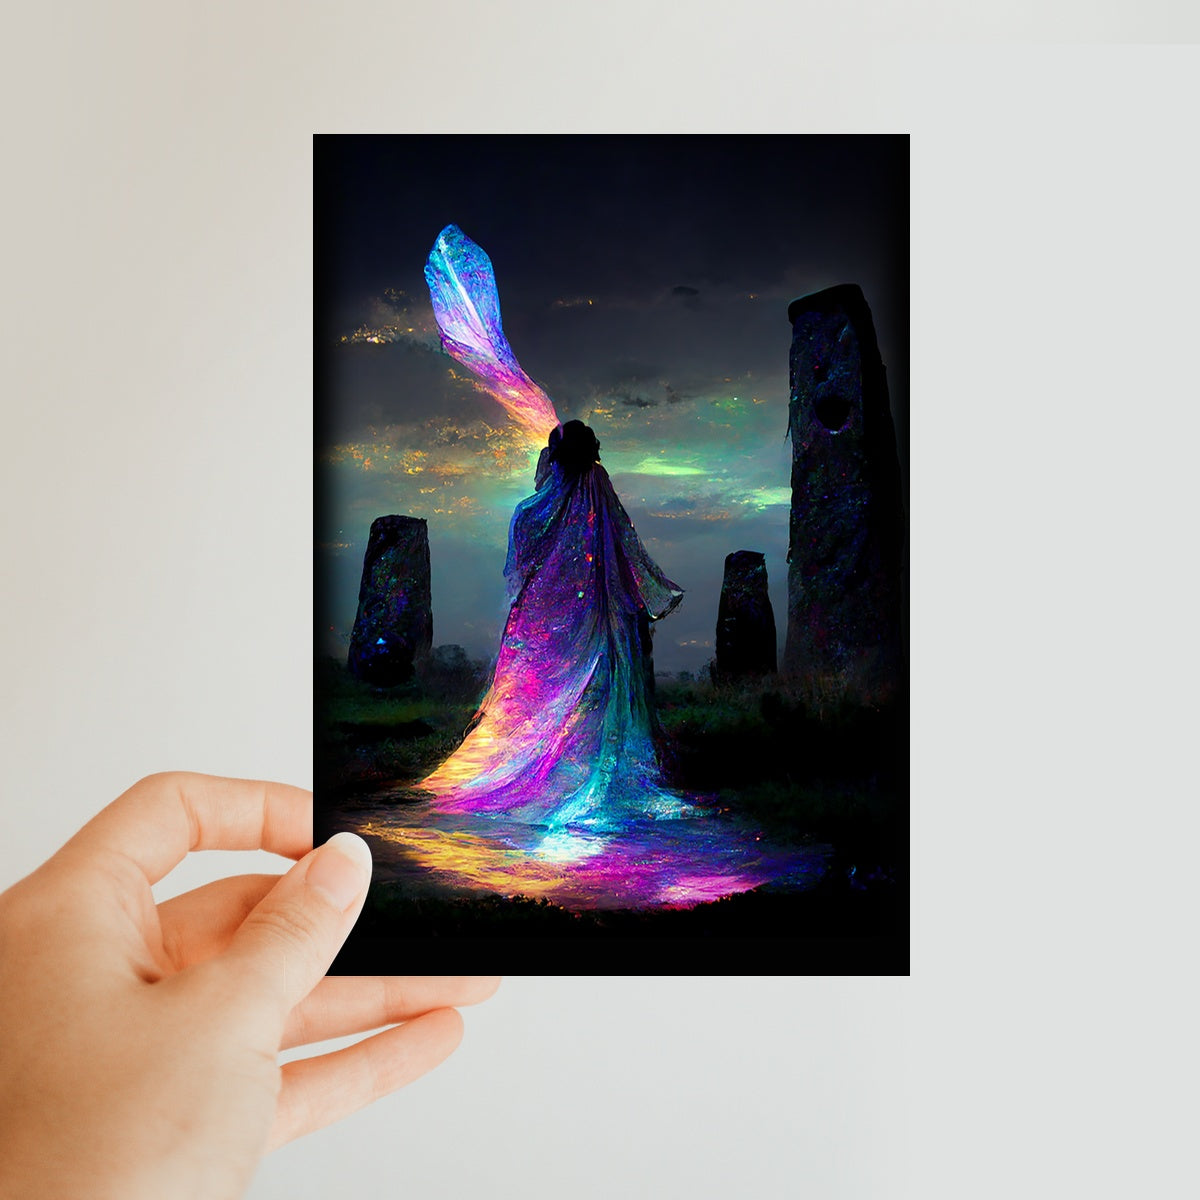 Iridescent energy fairy amongst ancient standing stones 1 Classic Postcard